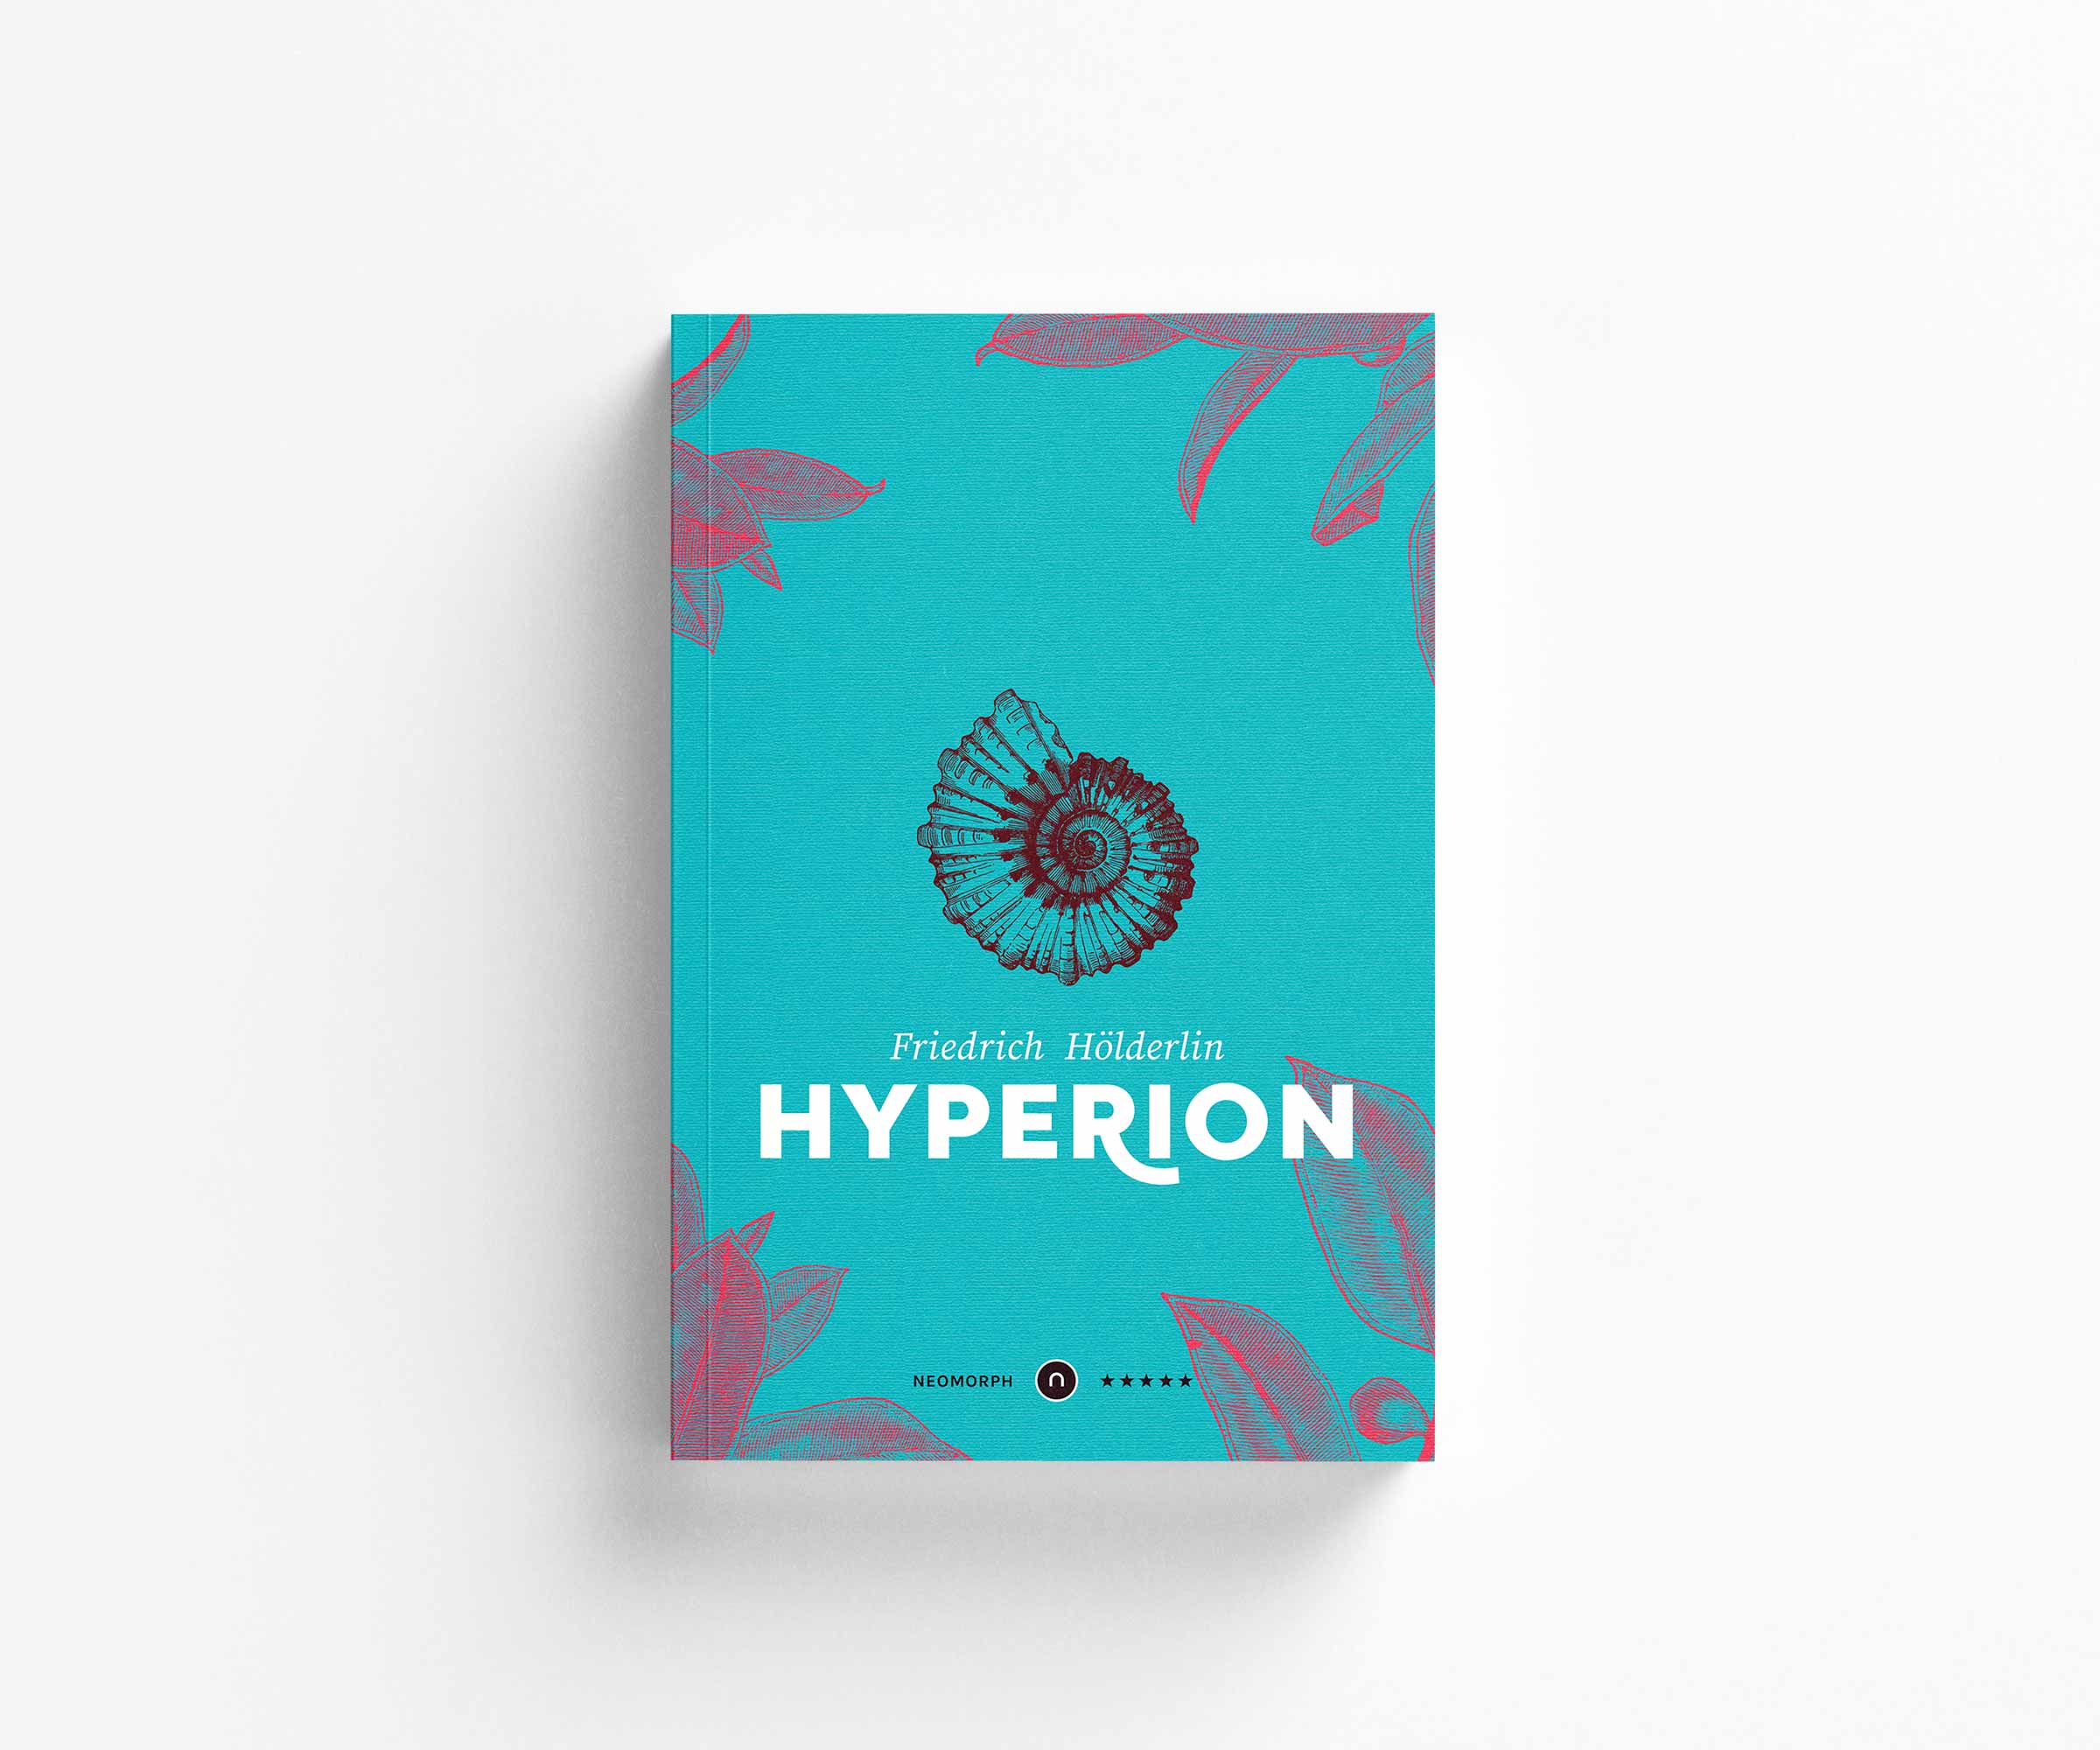 Hyperion © Neomorph